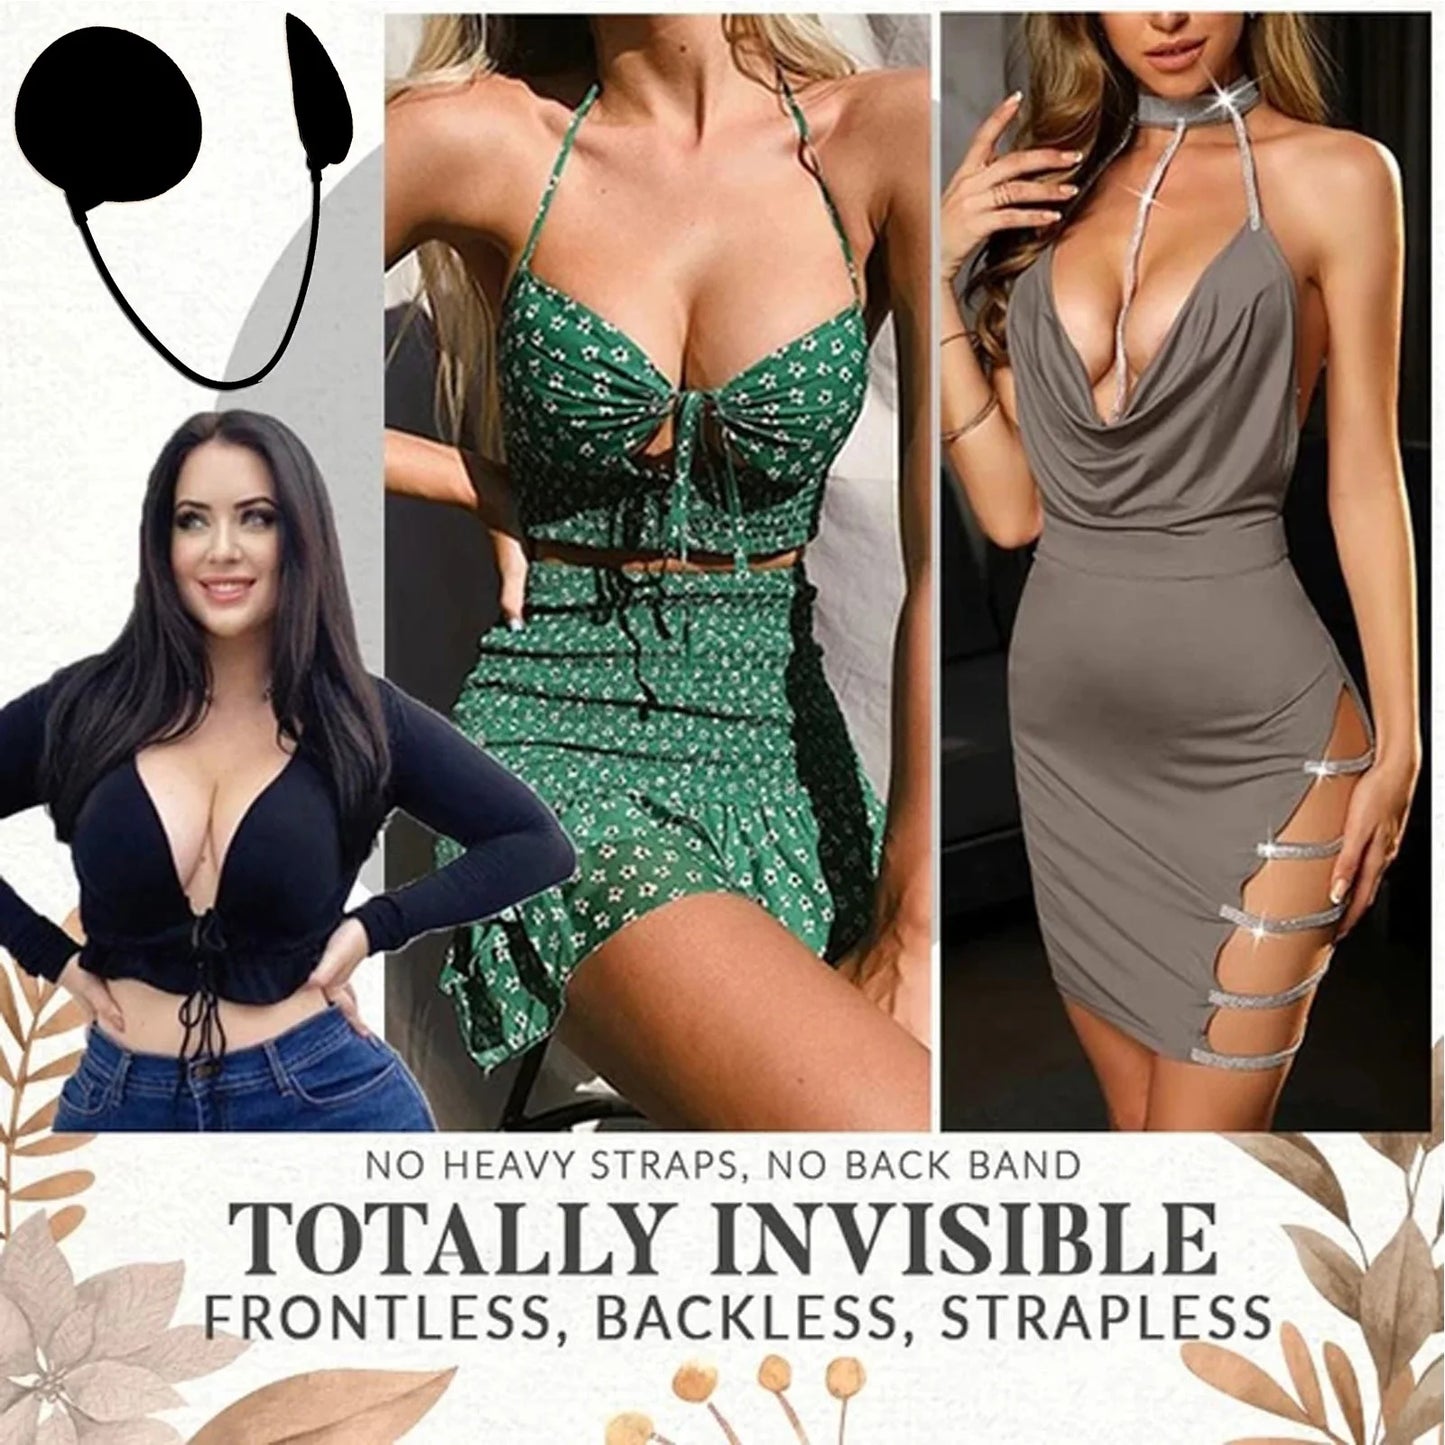 Backless Strapless Frontless Bras for Women